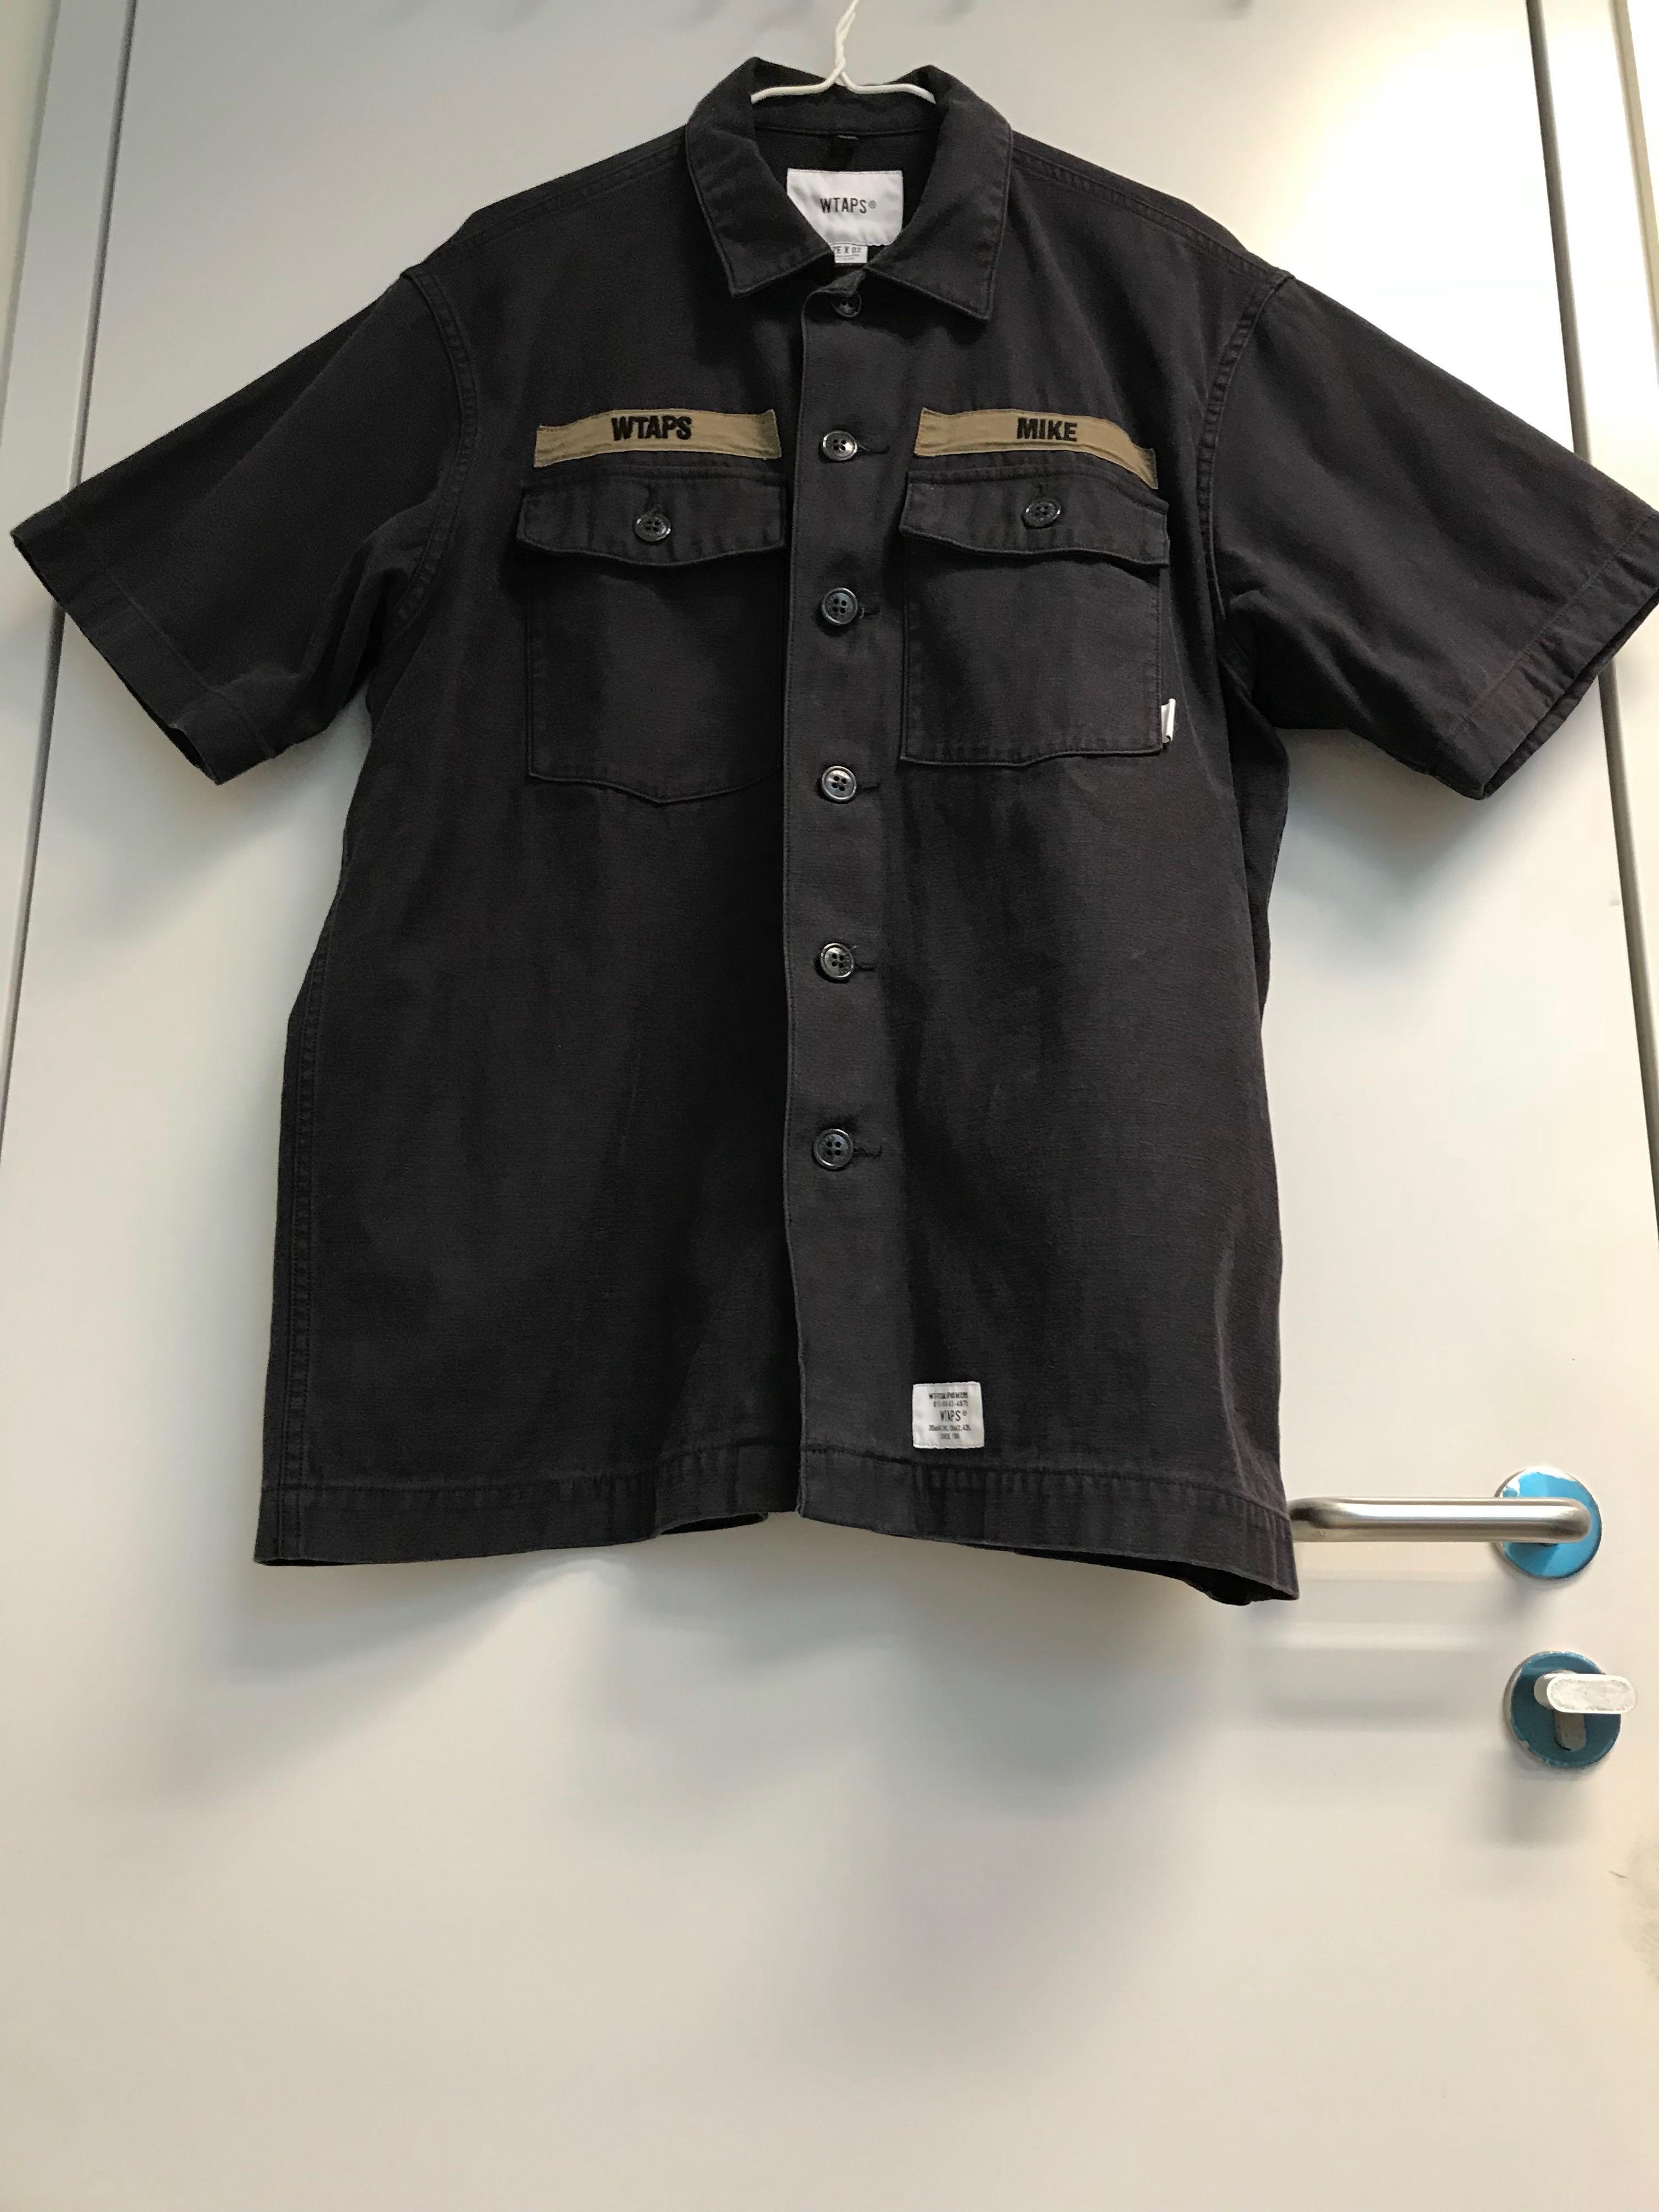 WTAPS 18SS Buds Shirt short sleeve size M 99% new, 女裝, 上衣, T 